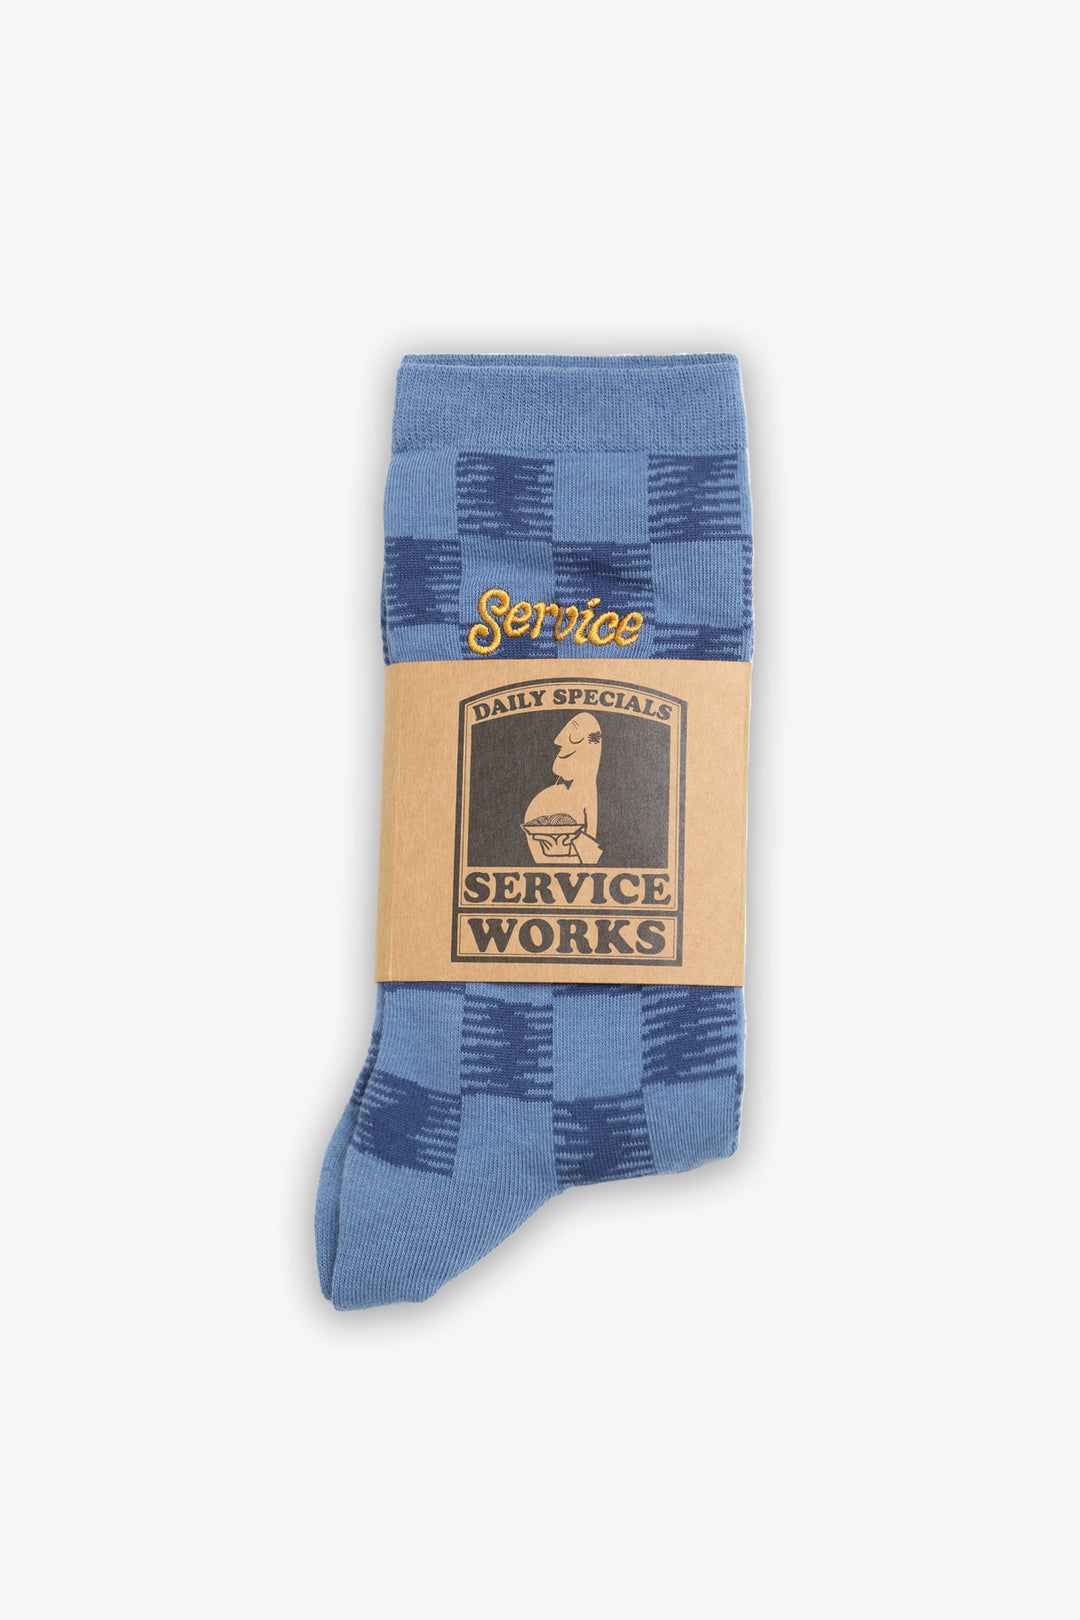 Service Works - Checker Socks - Blue